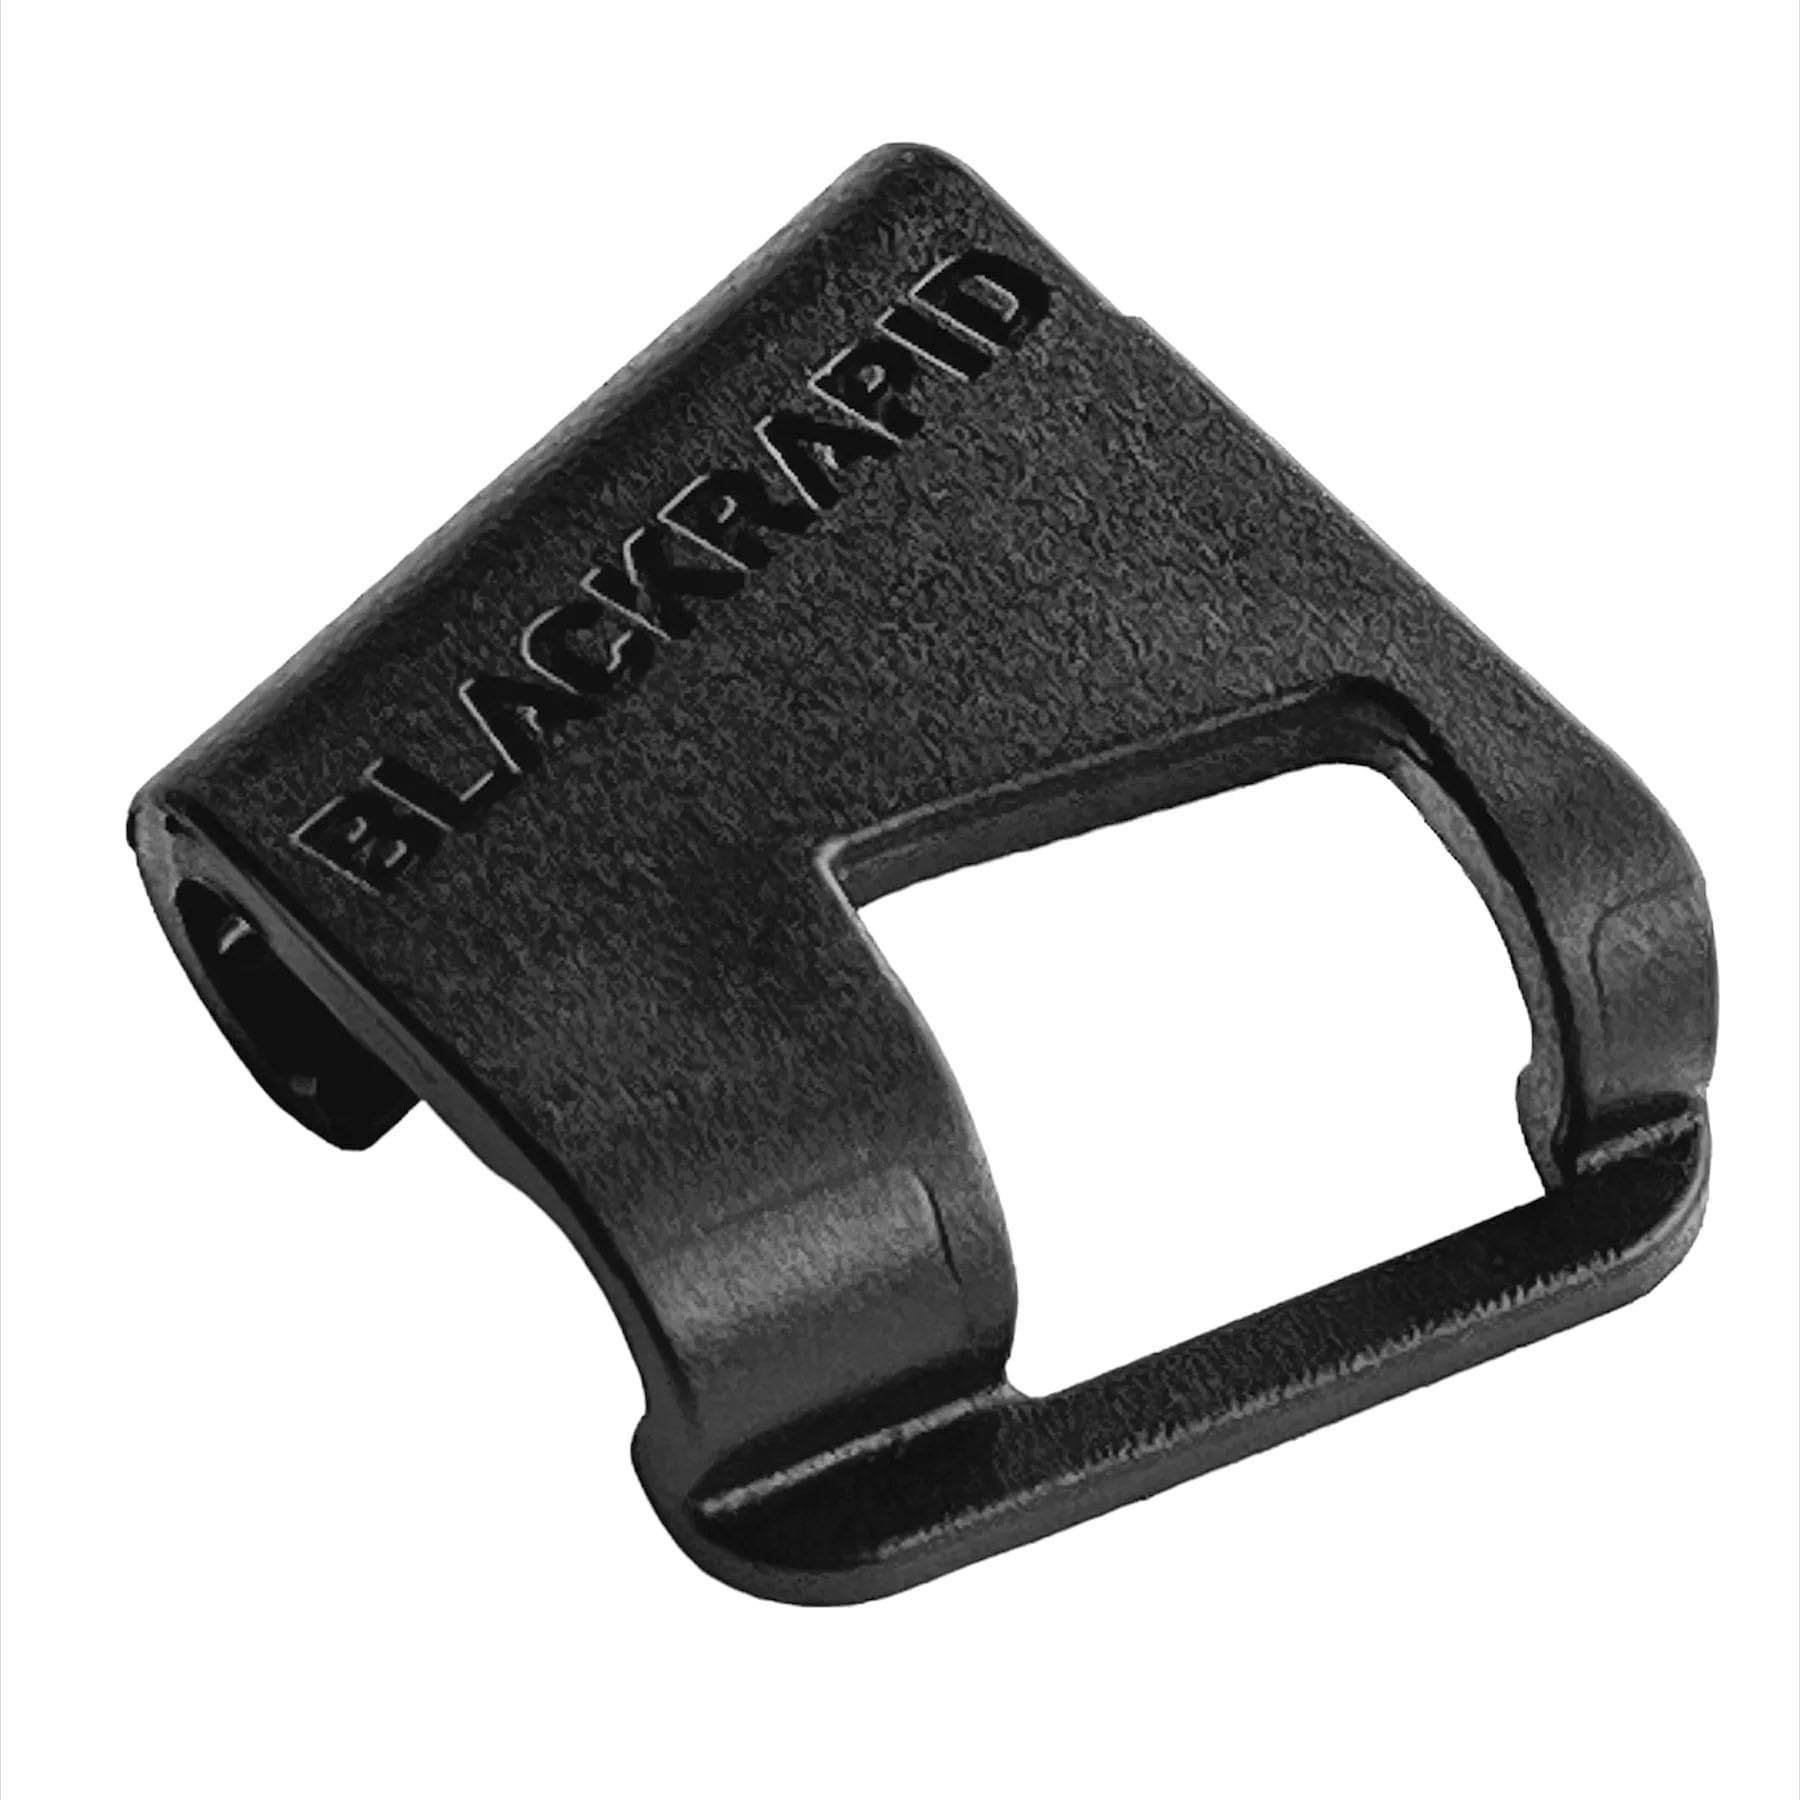 BLACKRAPID Blackline II Double Camera Harness - Best Double Camera Strap